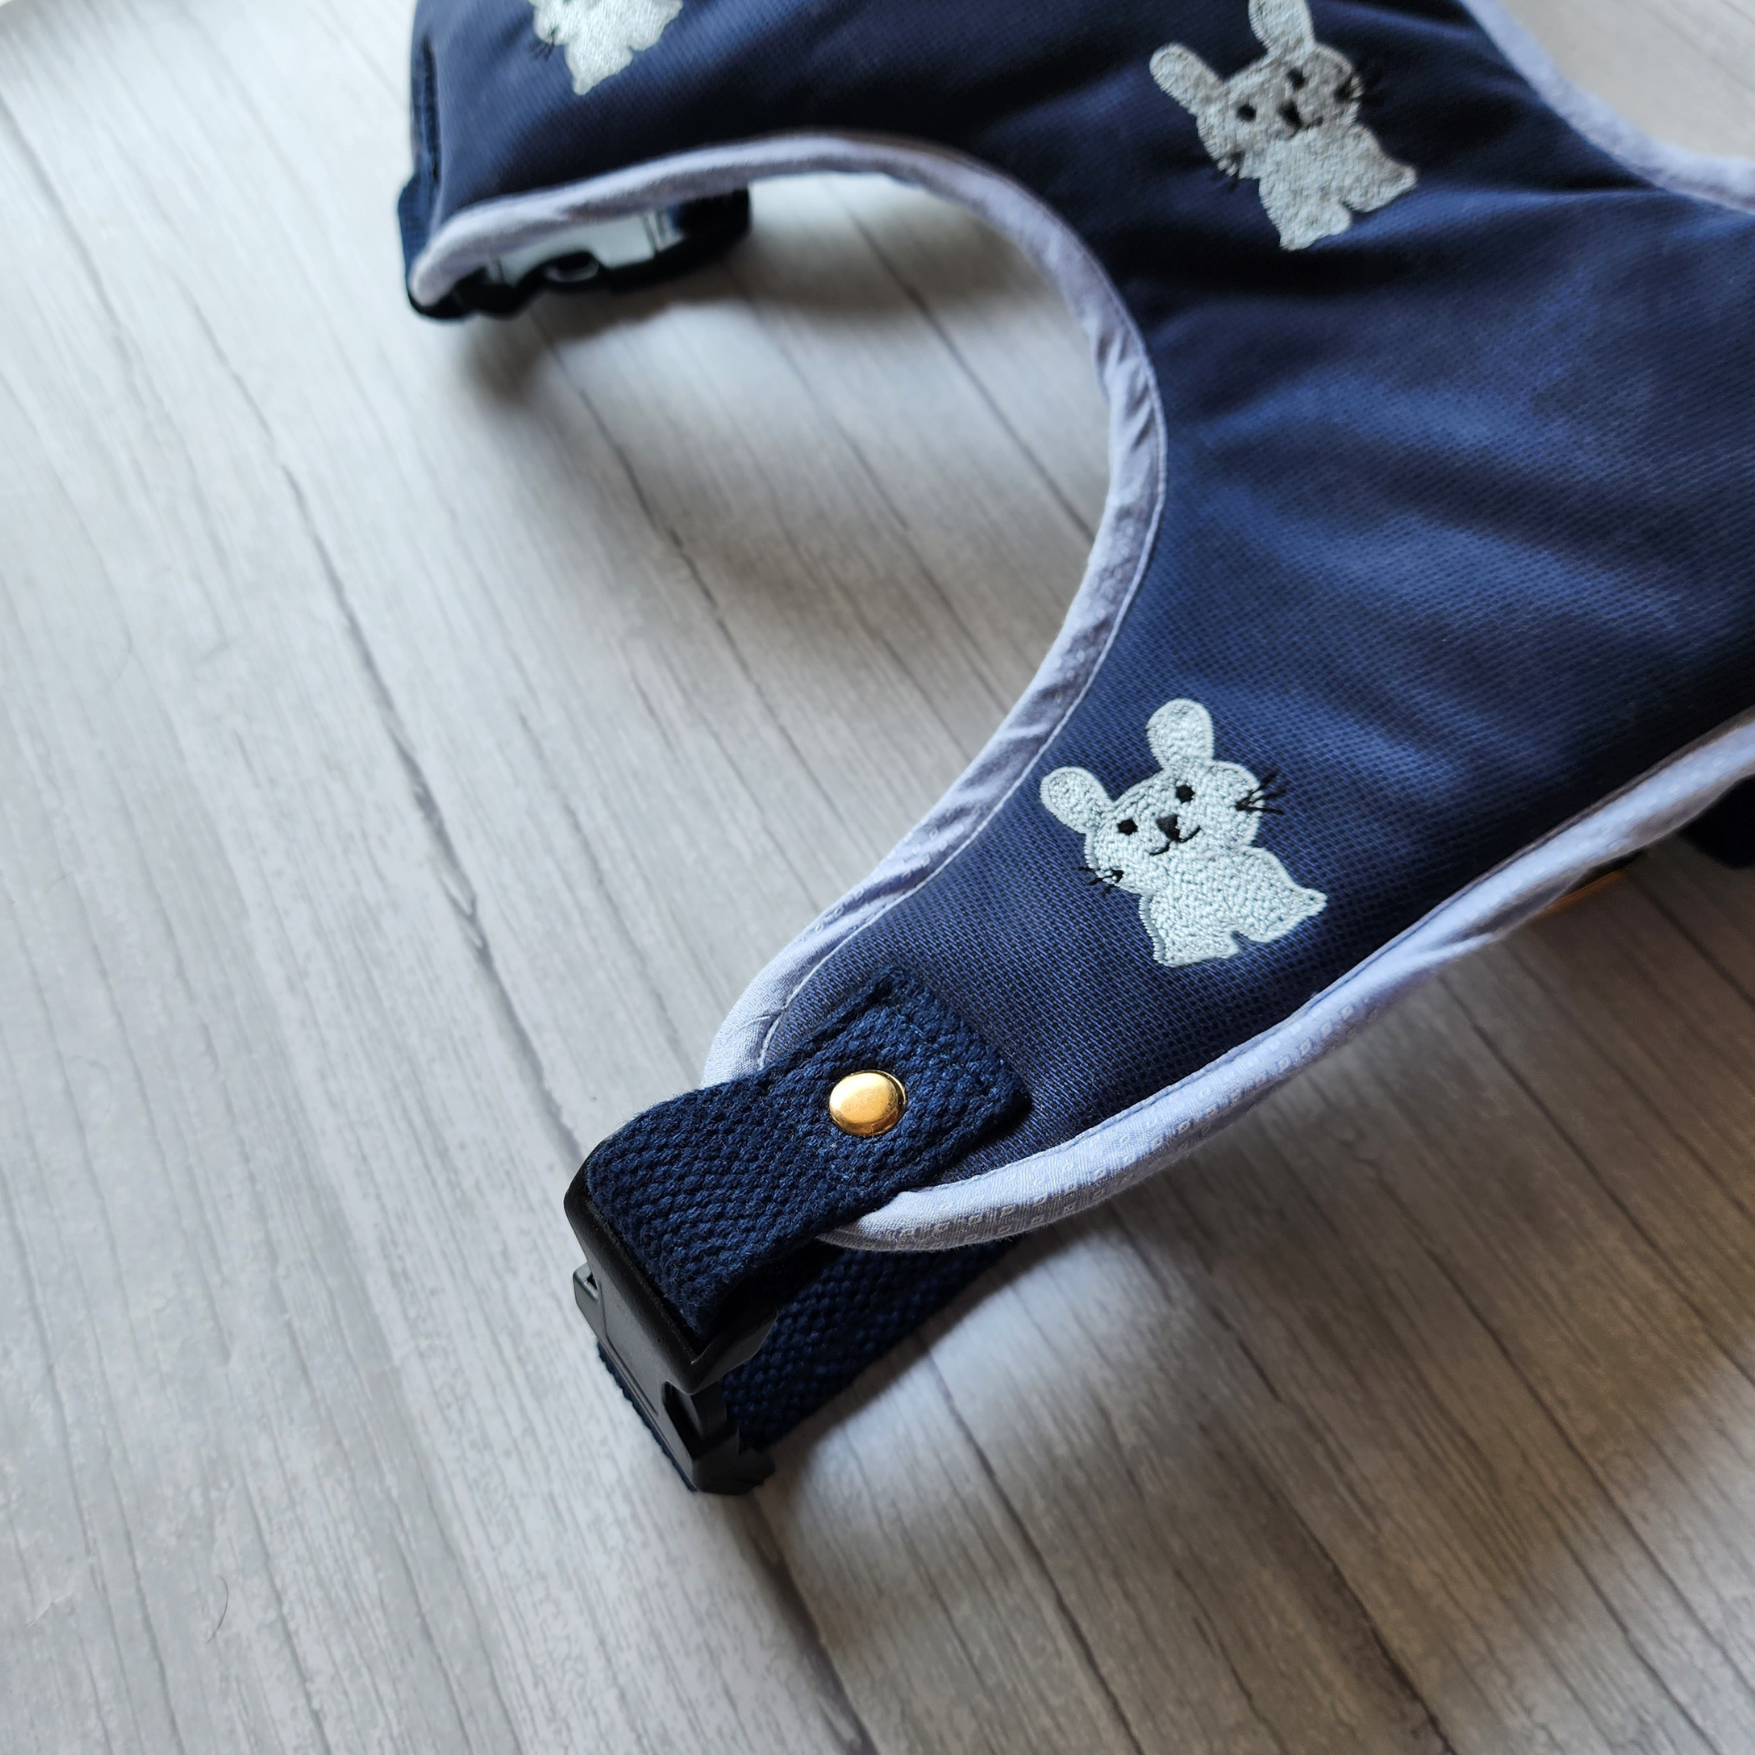 Buy Comfortable & Durable Denim Fabric Dog Collars l Lana Paws